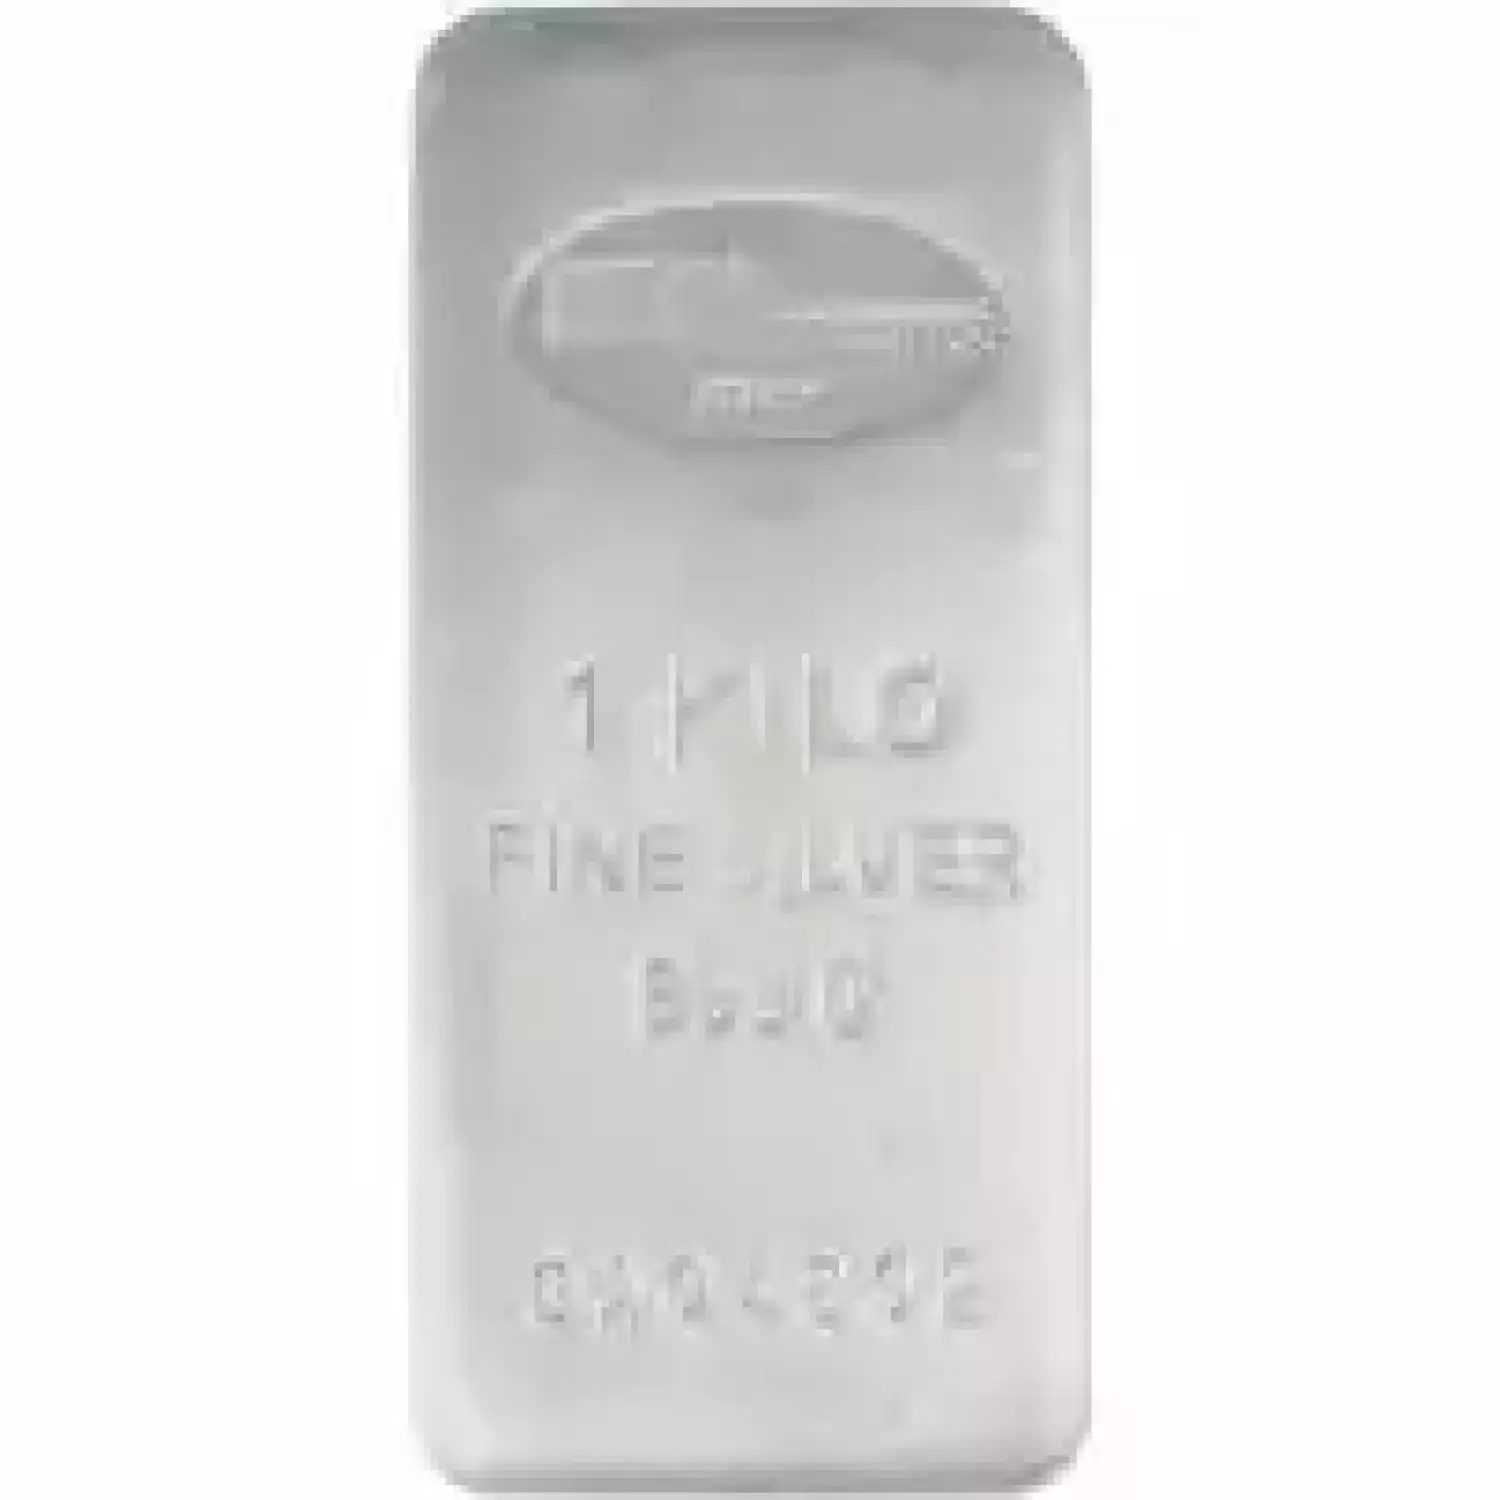 1kg Generic Silver Bar - No Packaging (2)